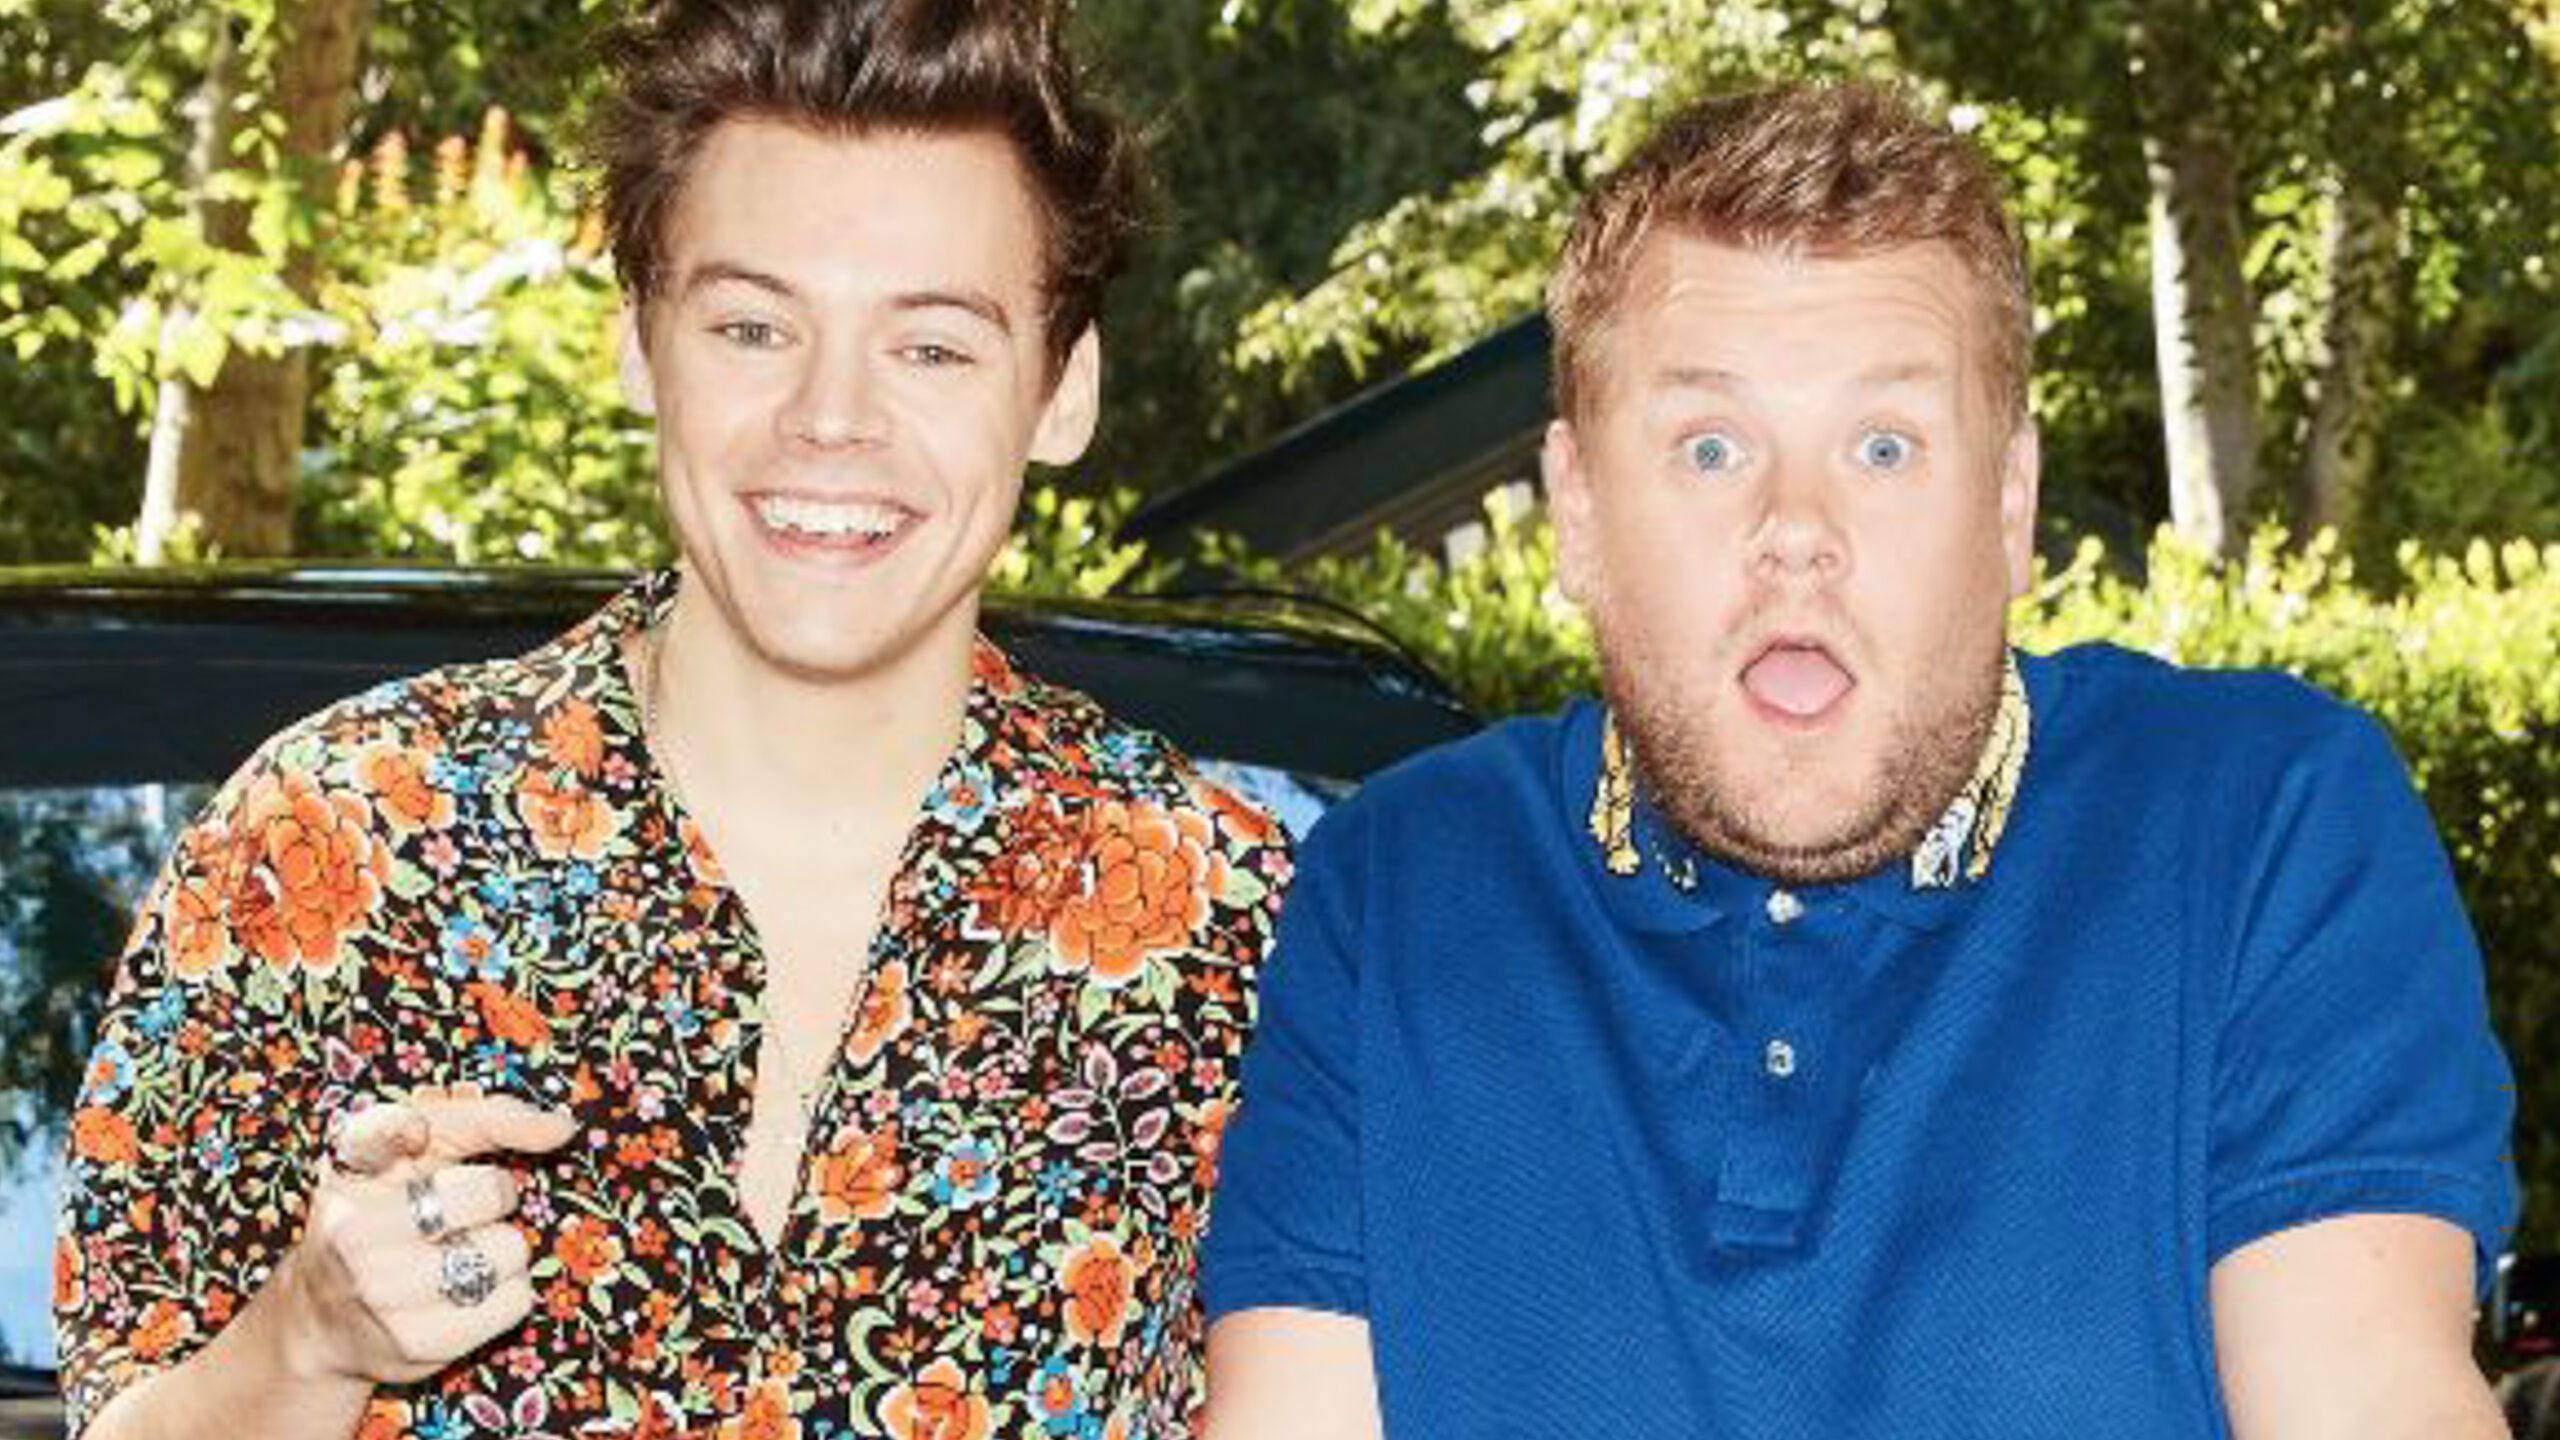 WATCH: Harry Styles joins James Corden on ‘Carpool Karaoke’